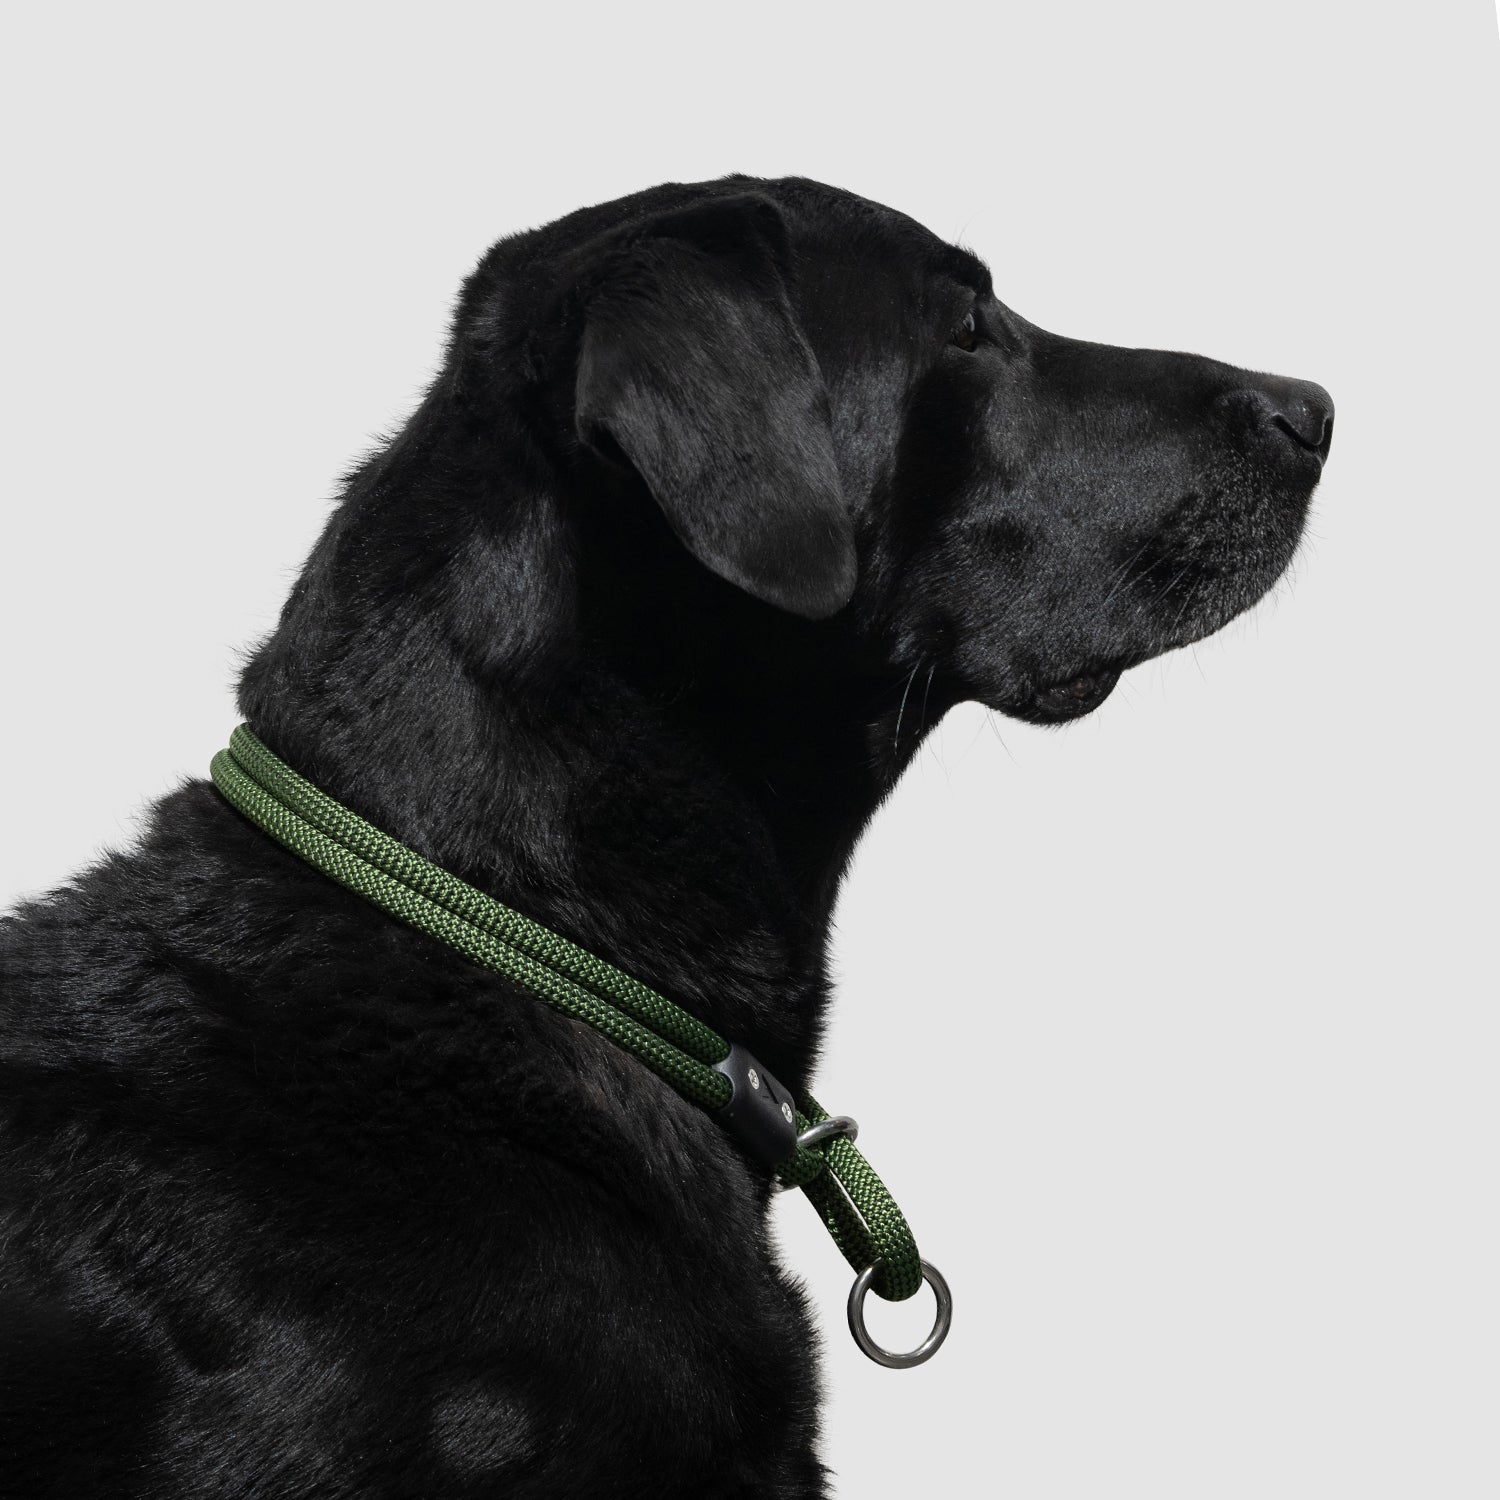 atlas pet company lifetime slip collar training collar for active pups handmade in colorado with lifetime warranty --moss